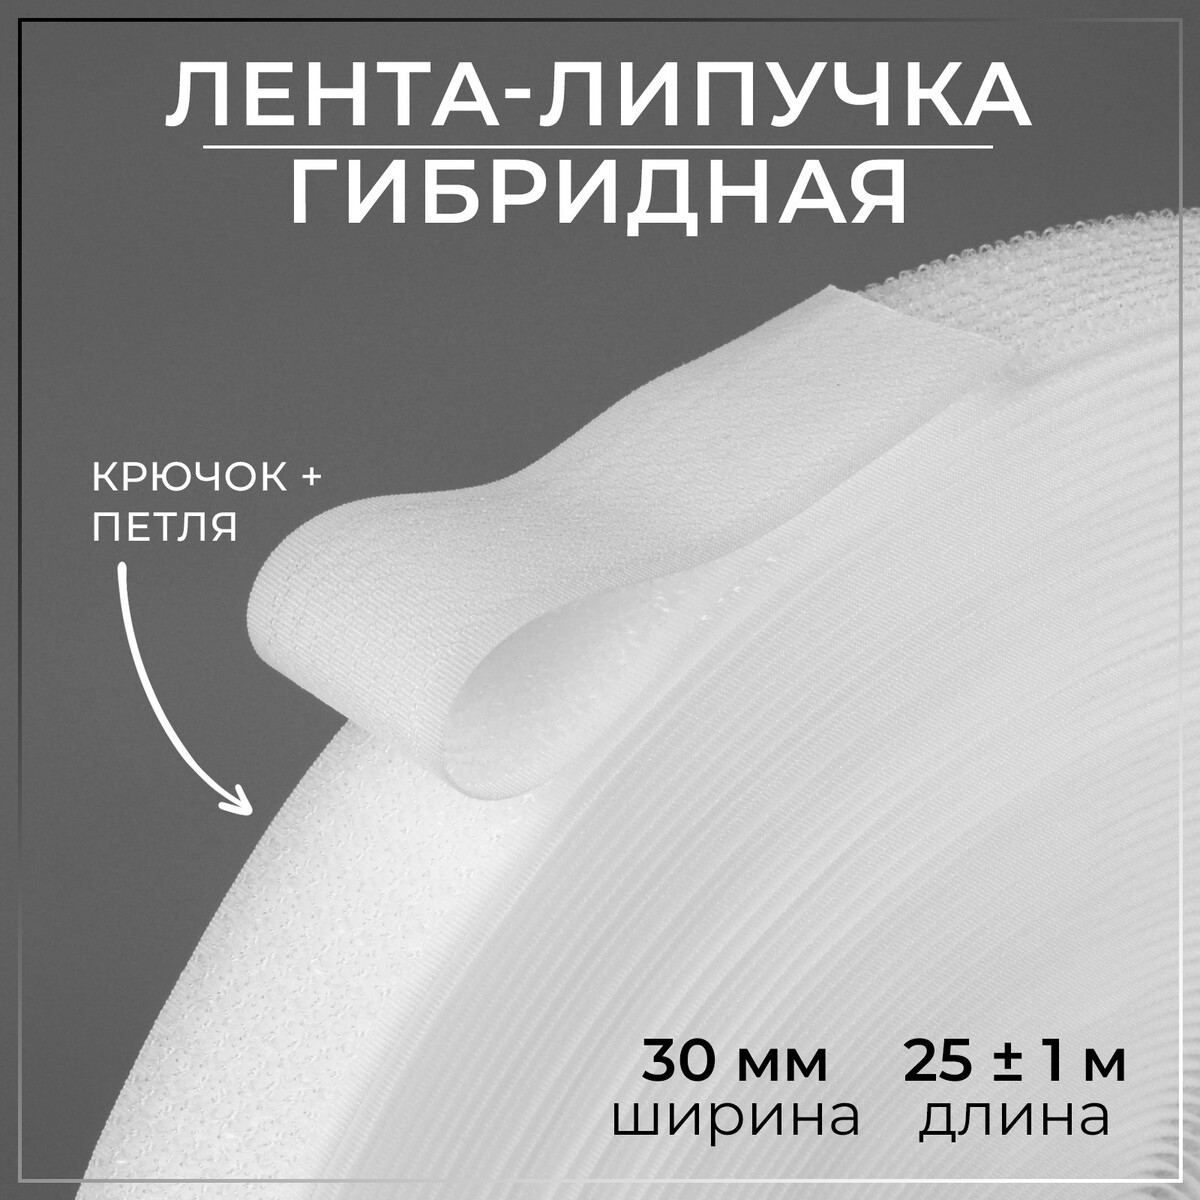 Липучка гибридная, 30 мм × 25 ± 1 м, цвет белый липучка гибридная 20 мм × 25 ± 1 м